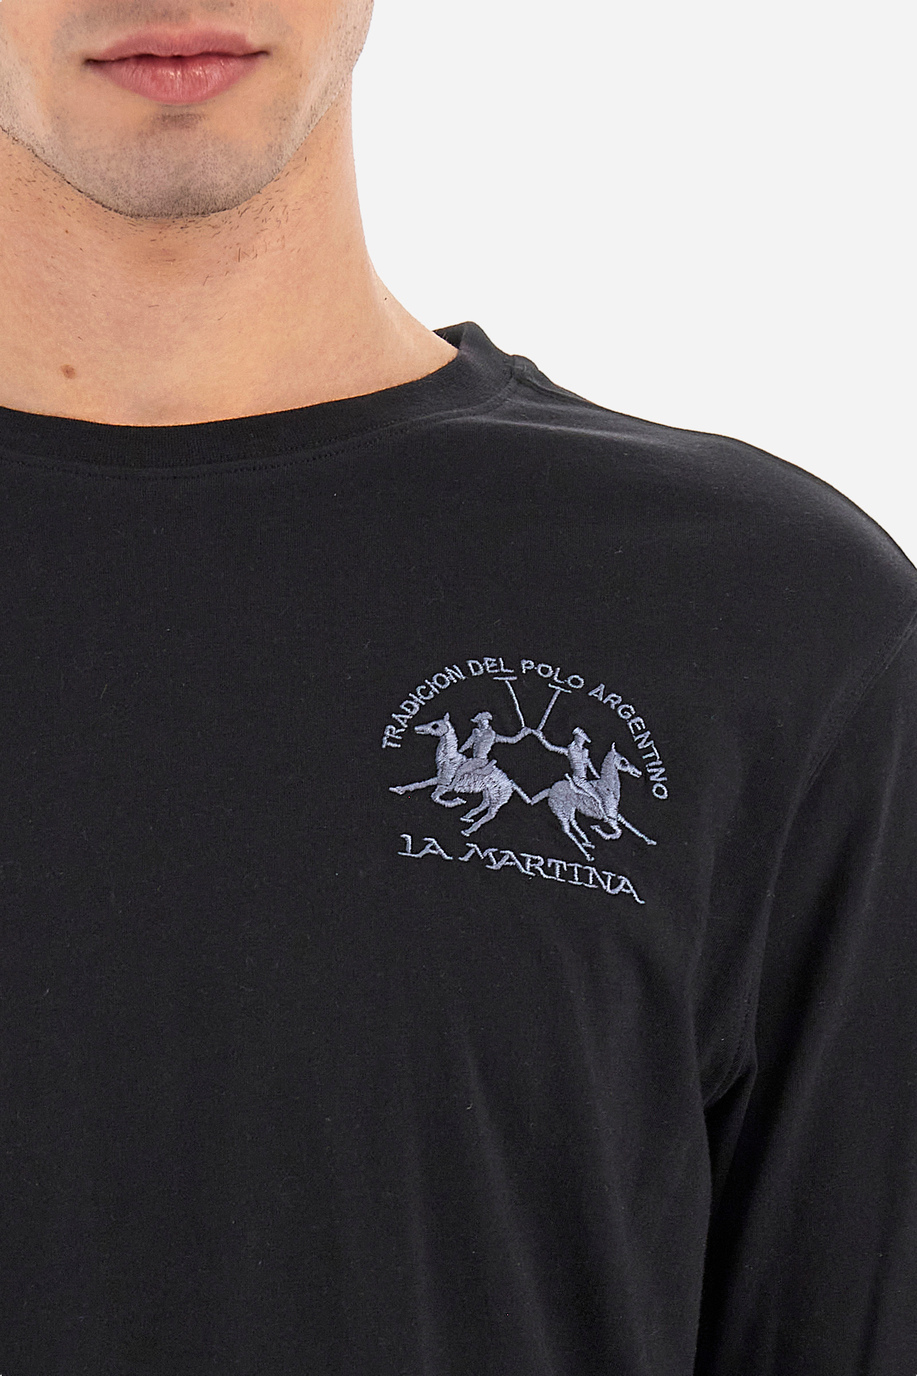 Tee-shirt homme coupe classique - Willey - T-Shirts | La Martina - Official Online Shop